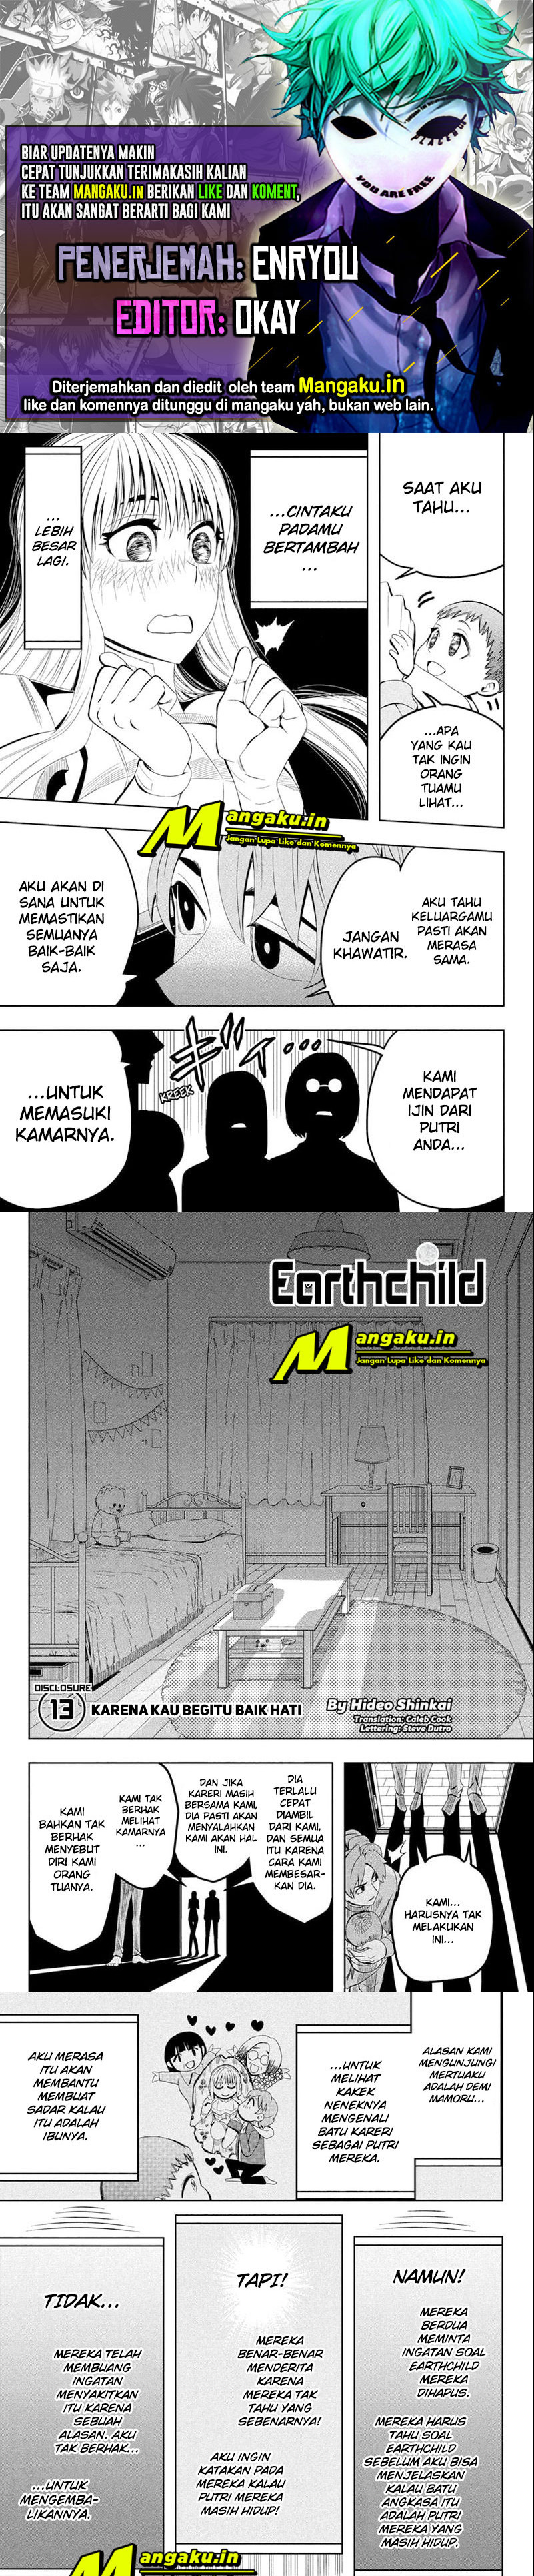 Earthchild Chapter 13